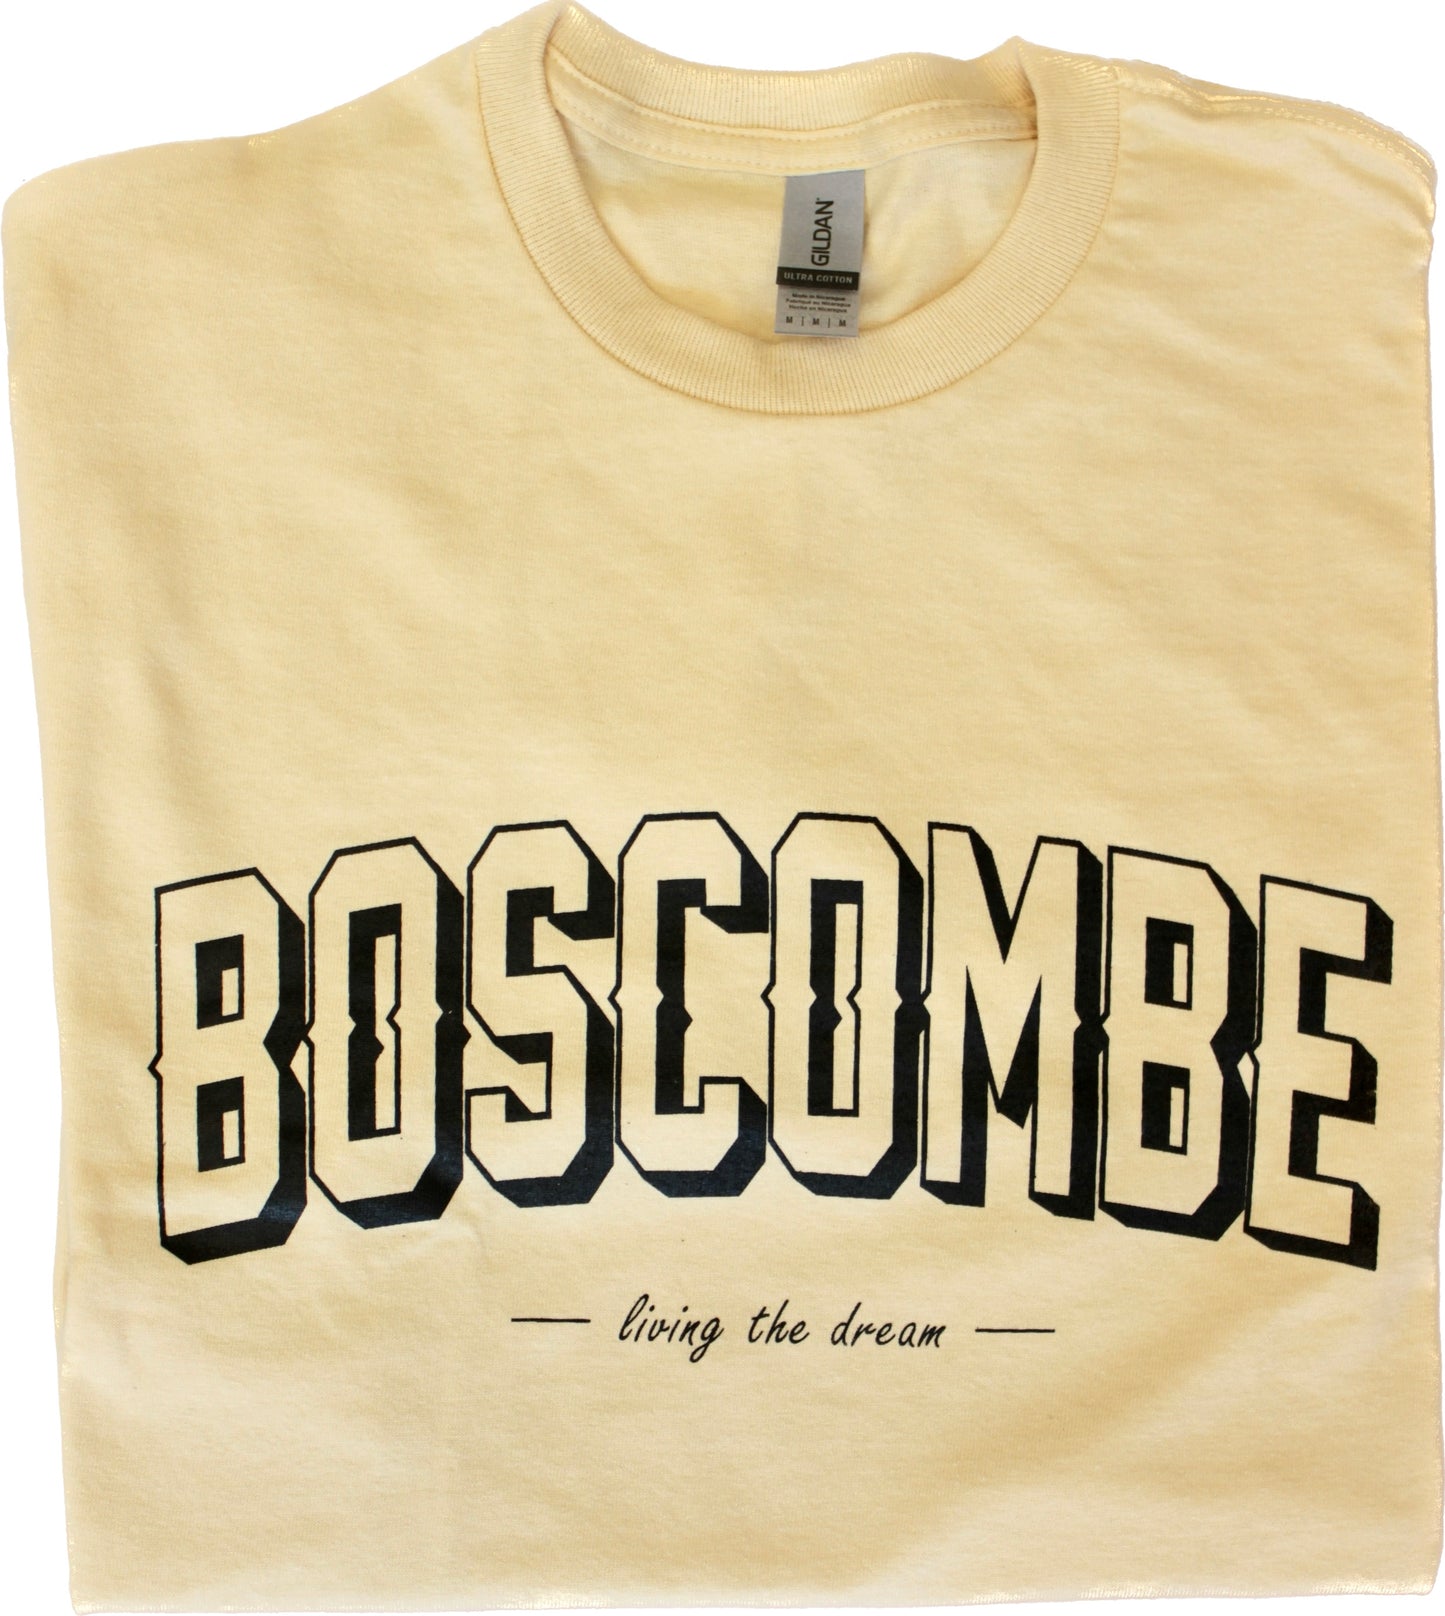 Boscombe 'Living the Dream' T-Shirt - Sand